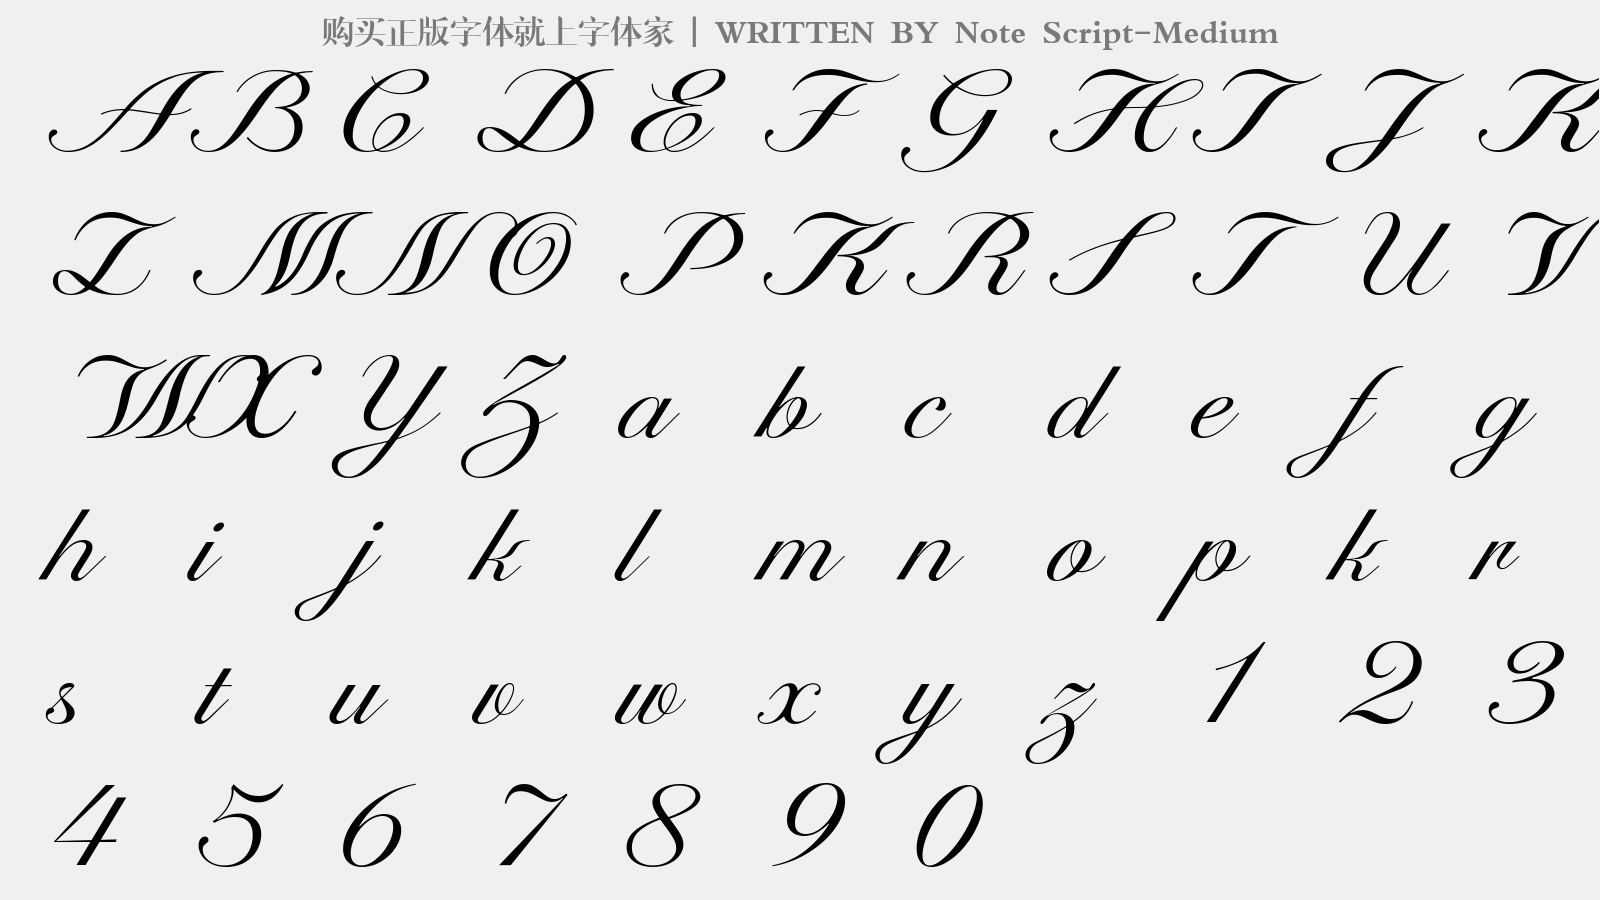 Note Script-Medium - 大写字母/小写字母/数字